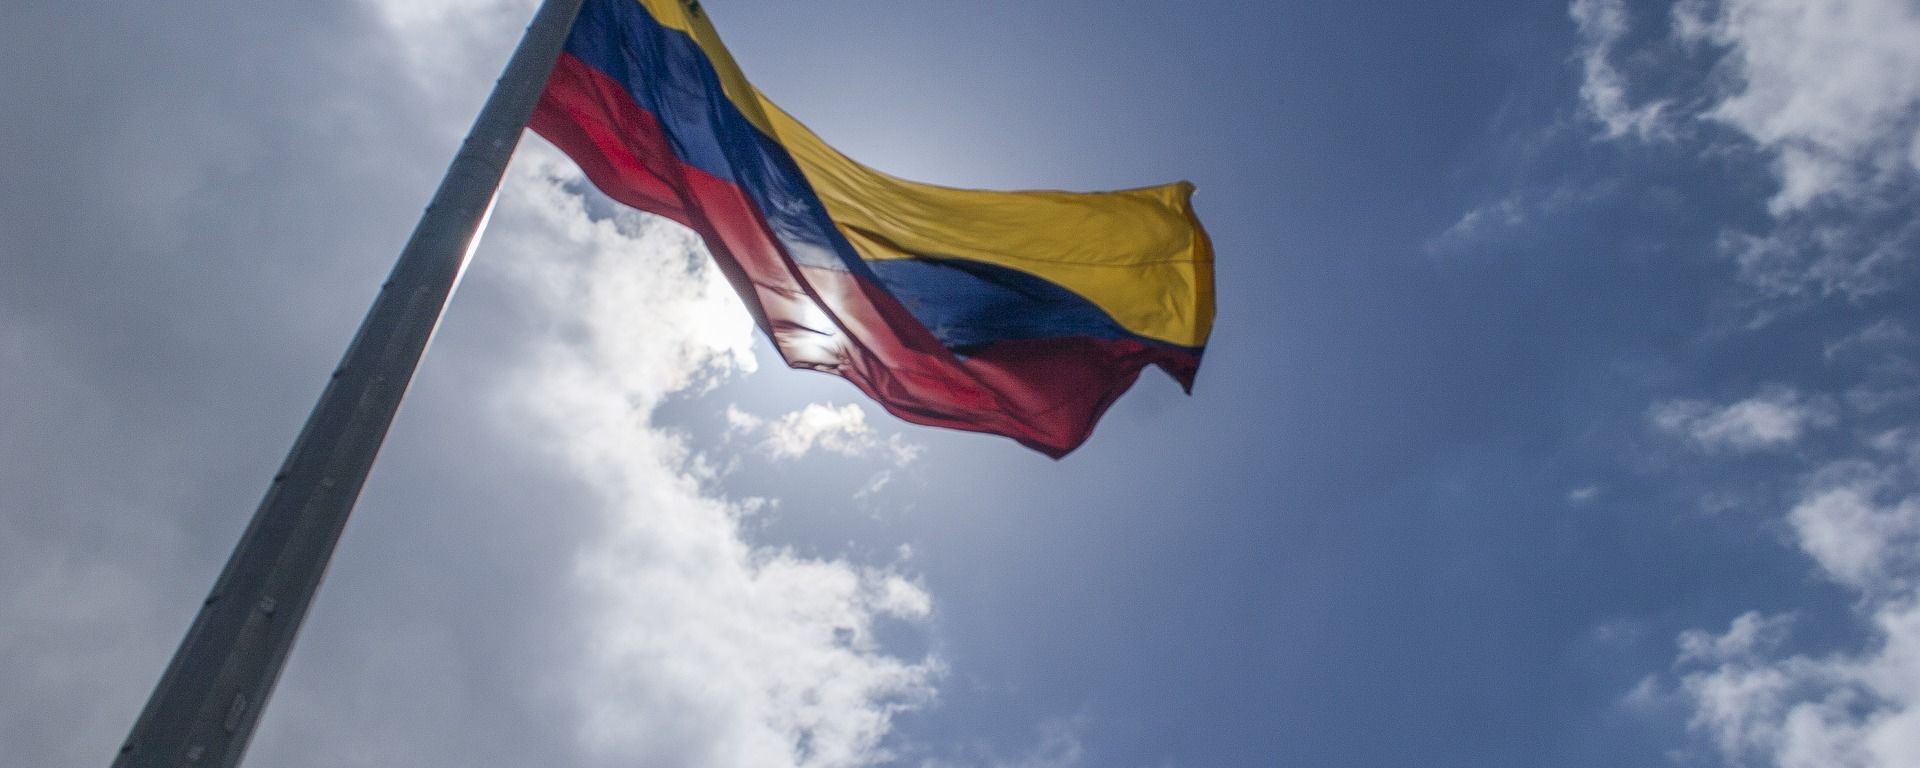 Bandera de Venezuela - Sputnik Mundo, 1920, 26.02.2021